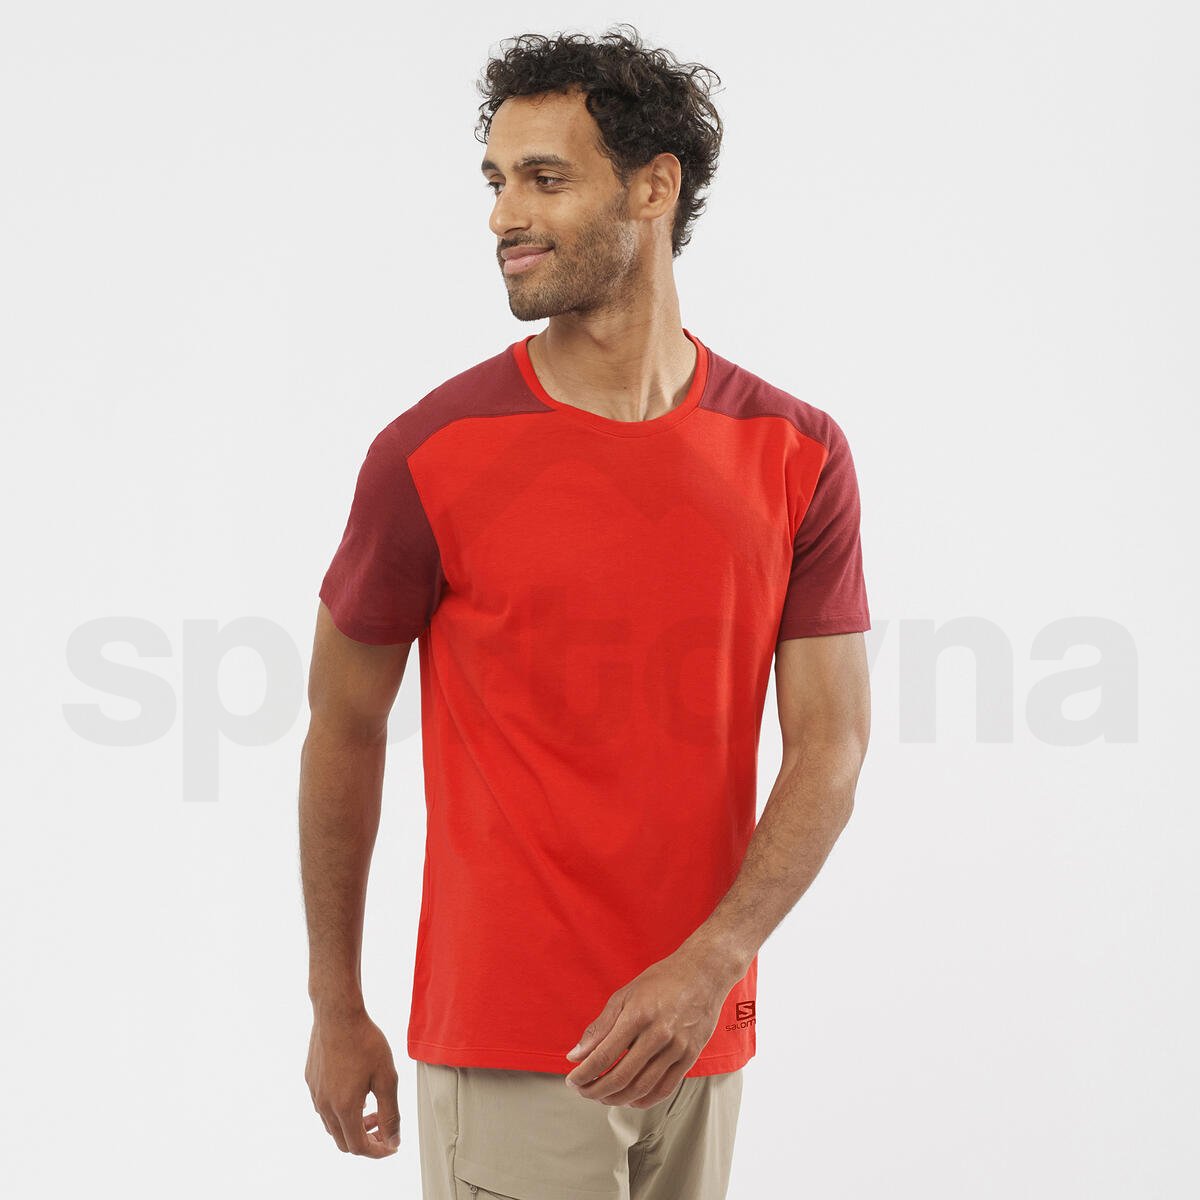 Tričko Salomon ESSENTIAL COLORBLOC M - červená/oranžová